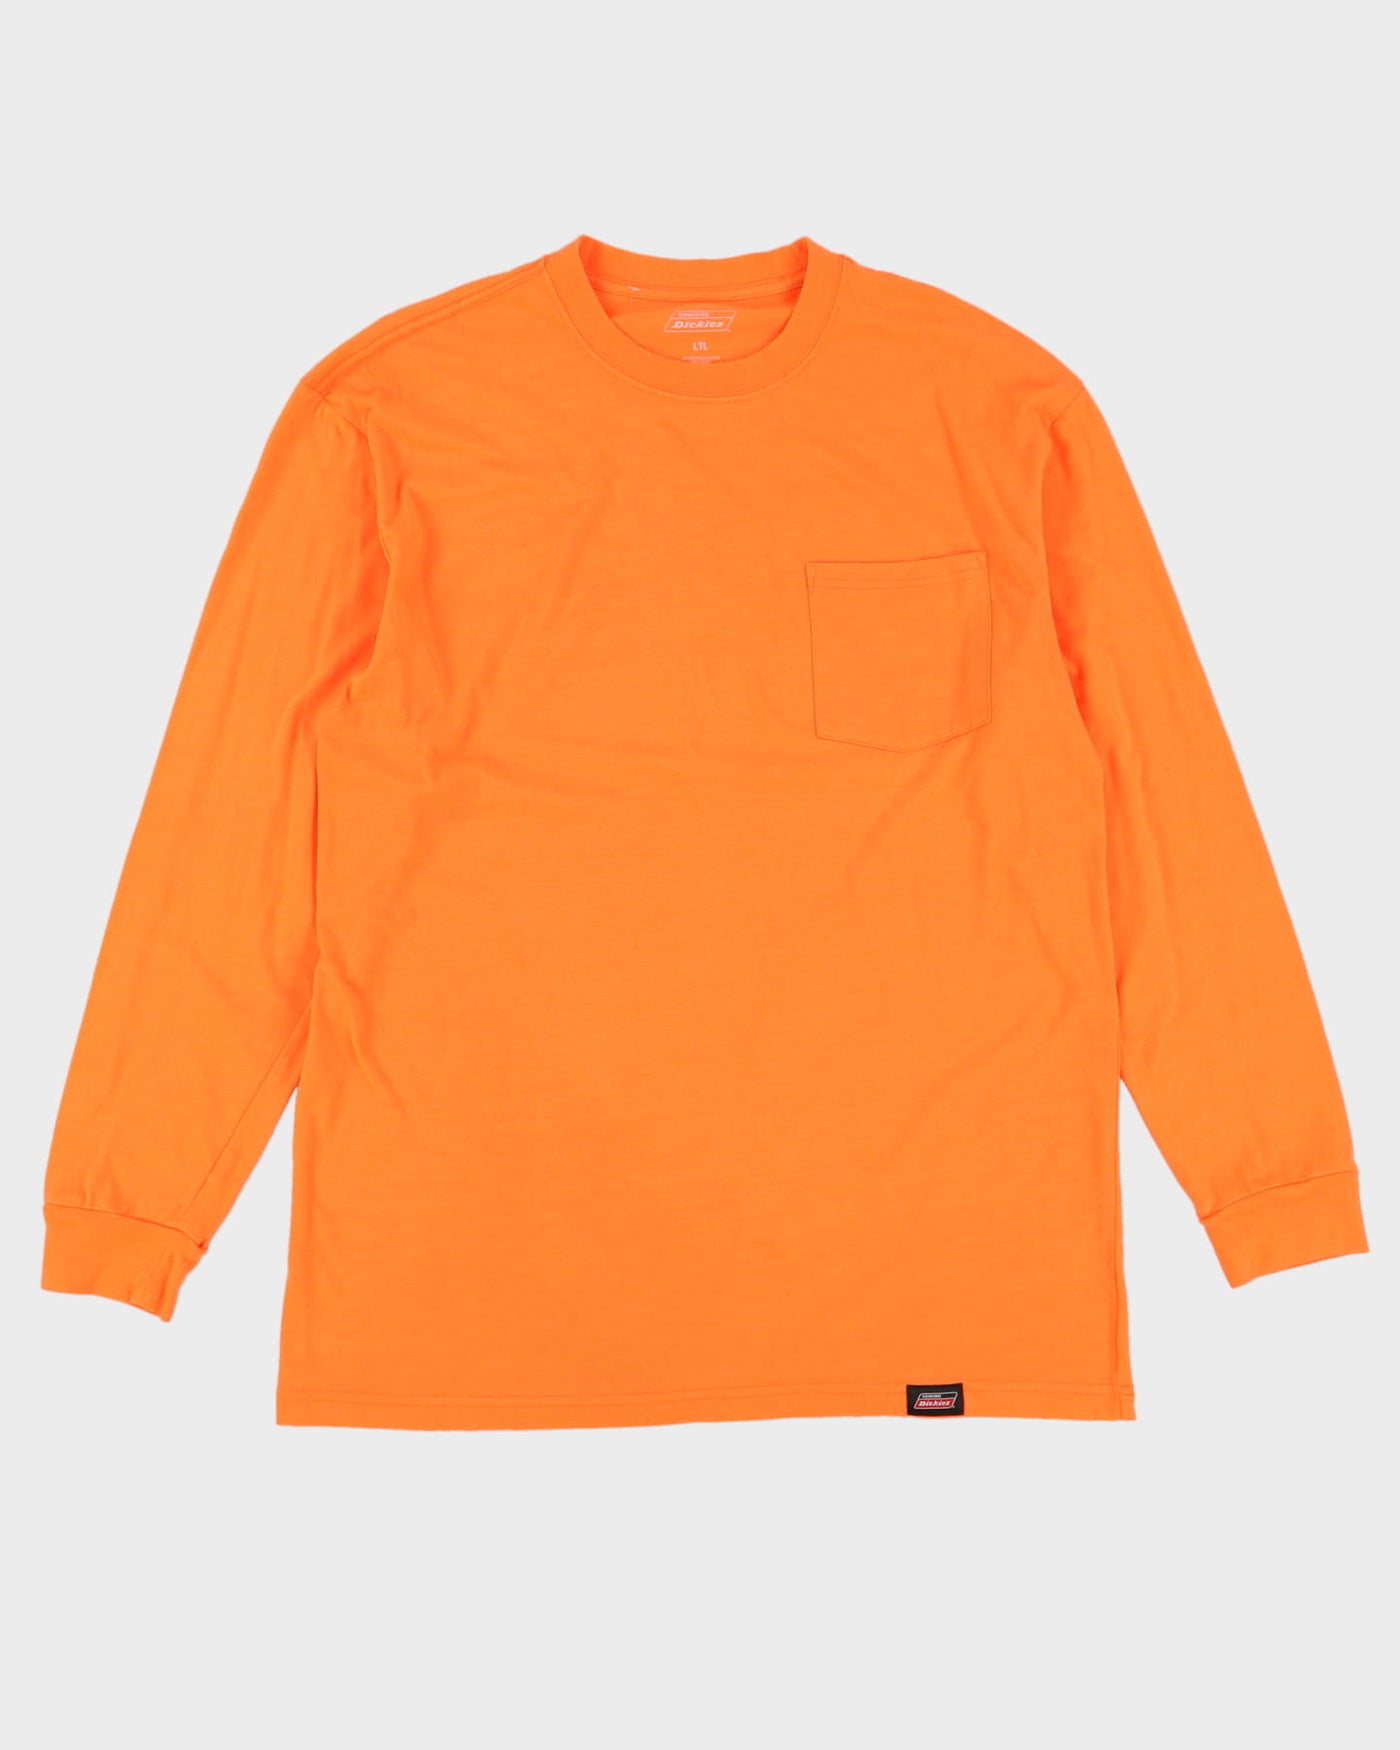 Dickies Orange Long Sleeve T-Shirt - L